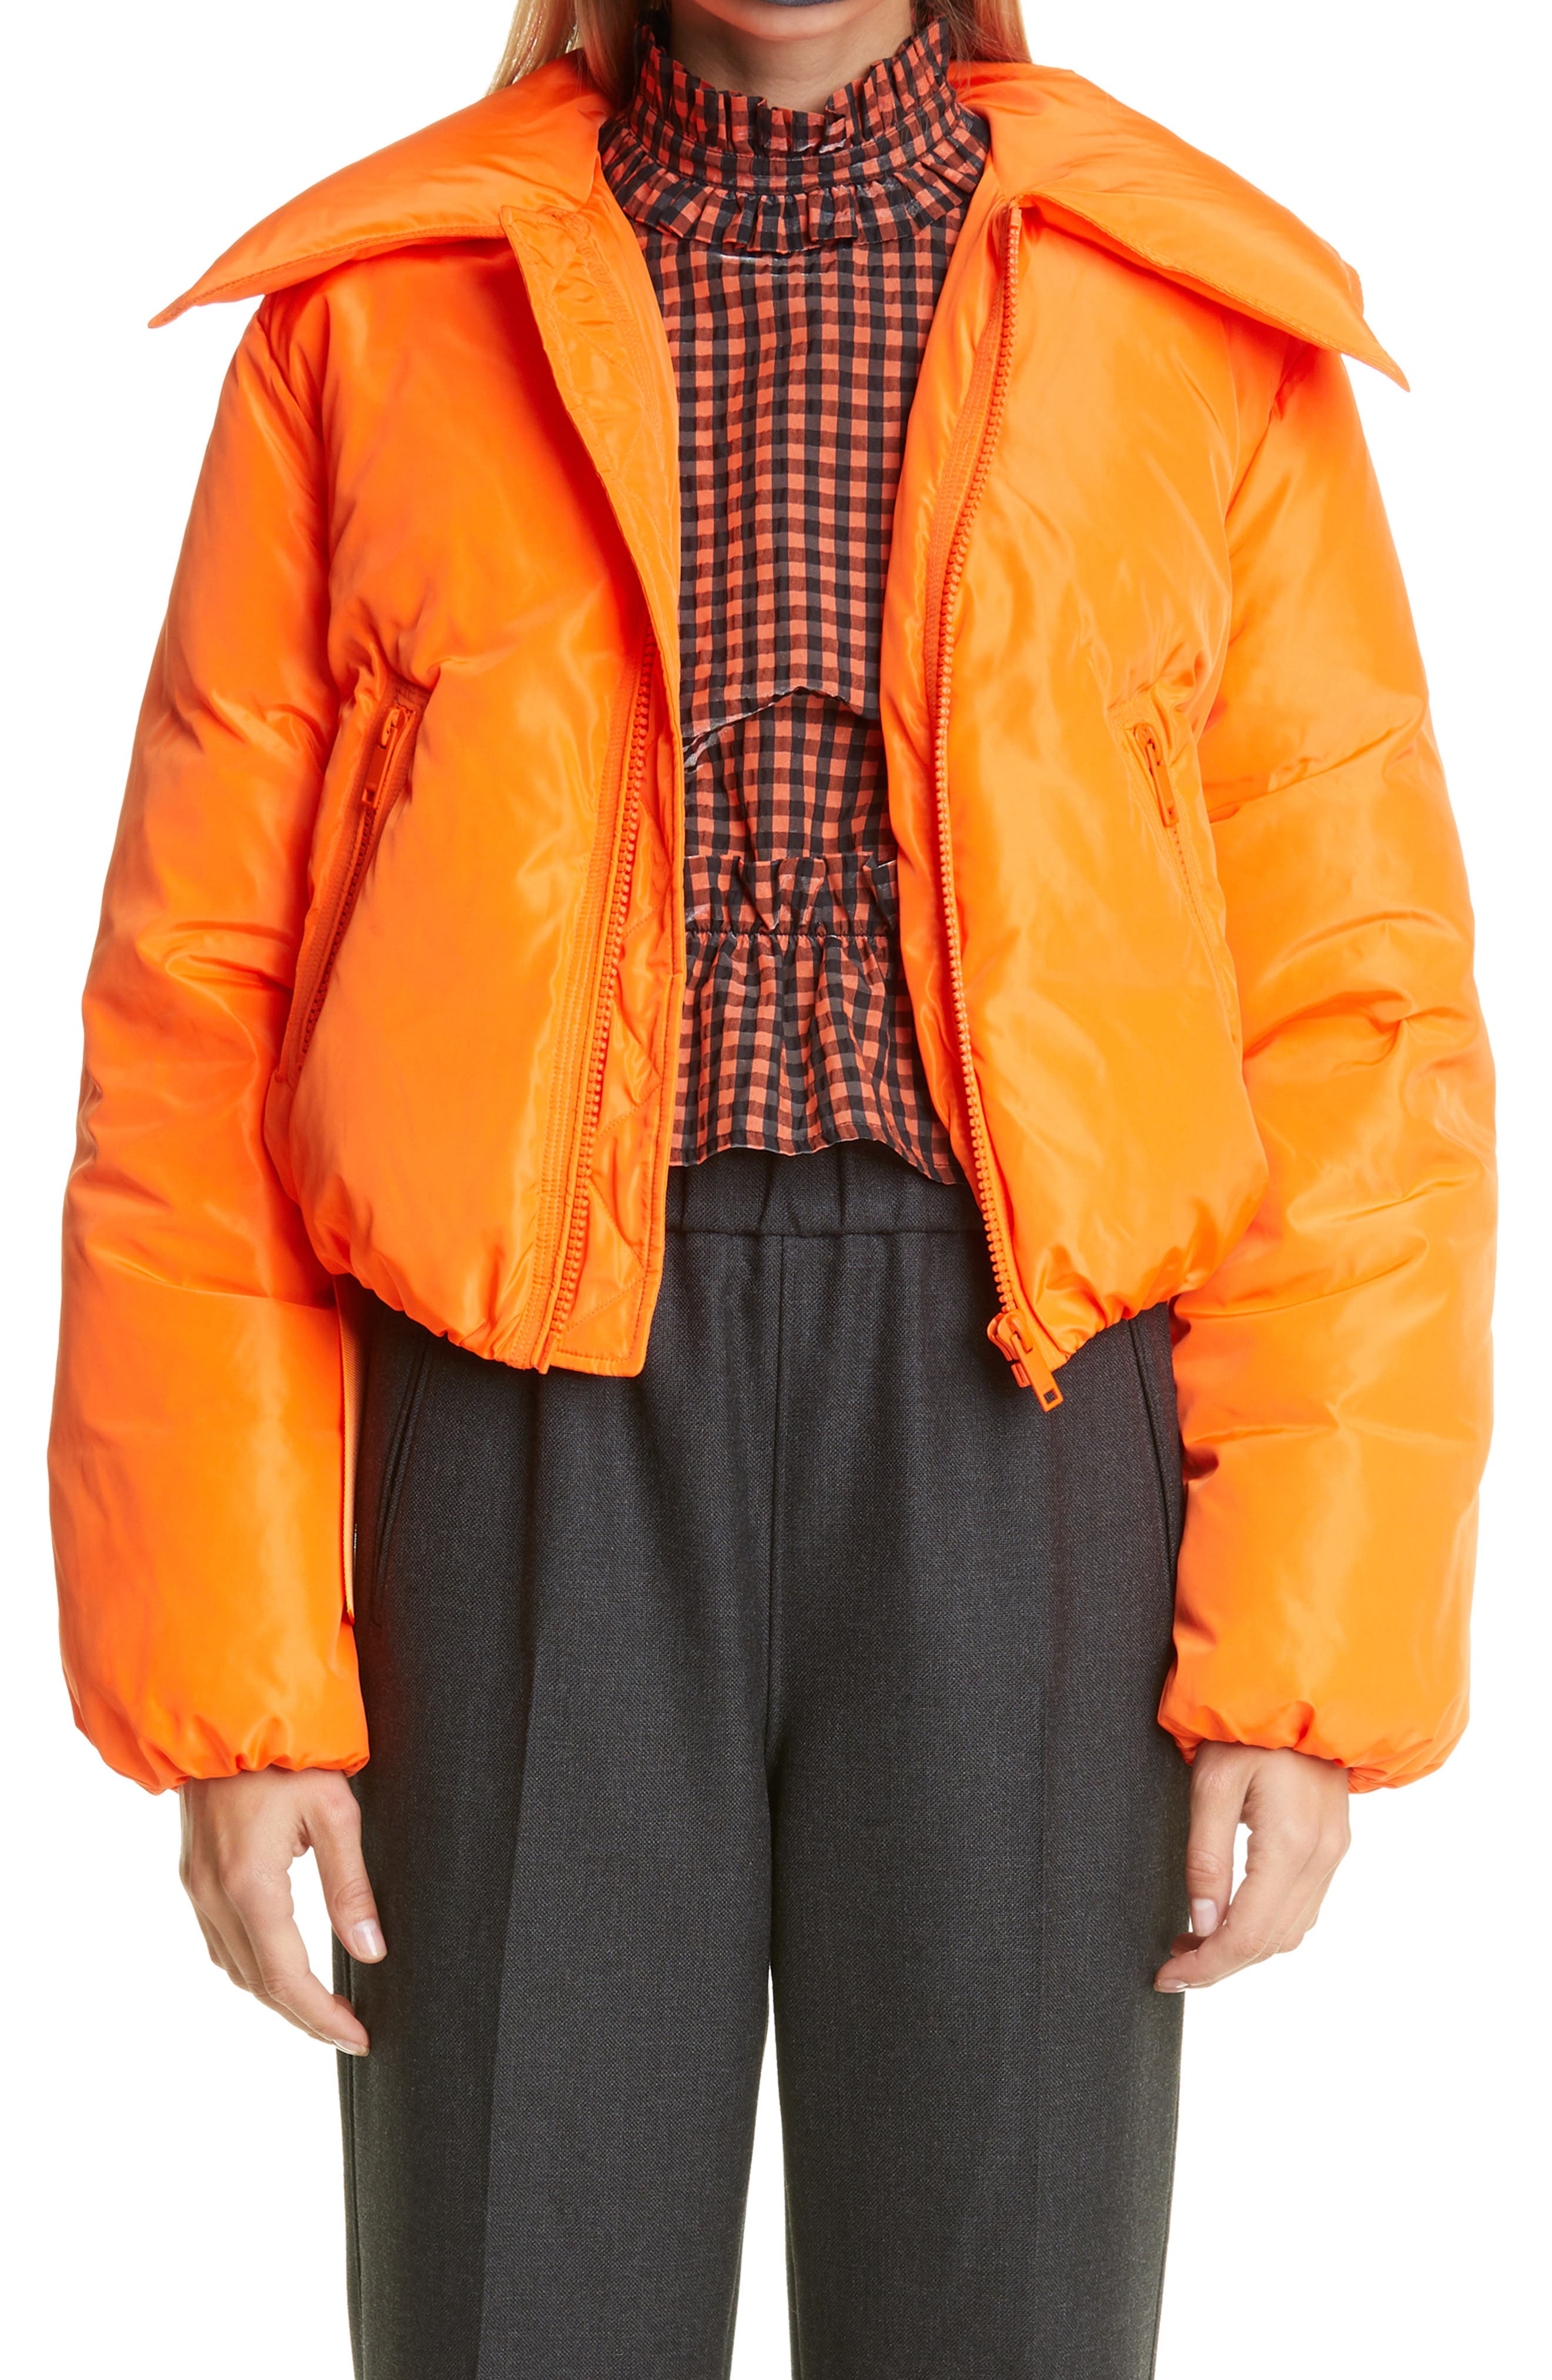 fendi orange puffer jacket